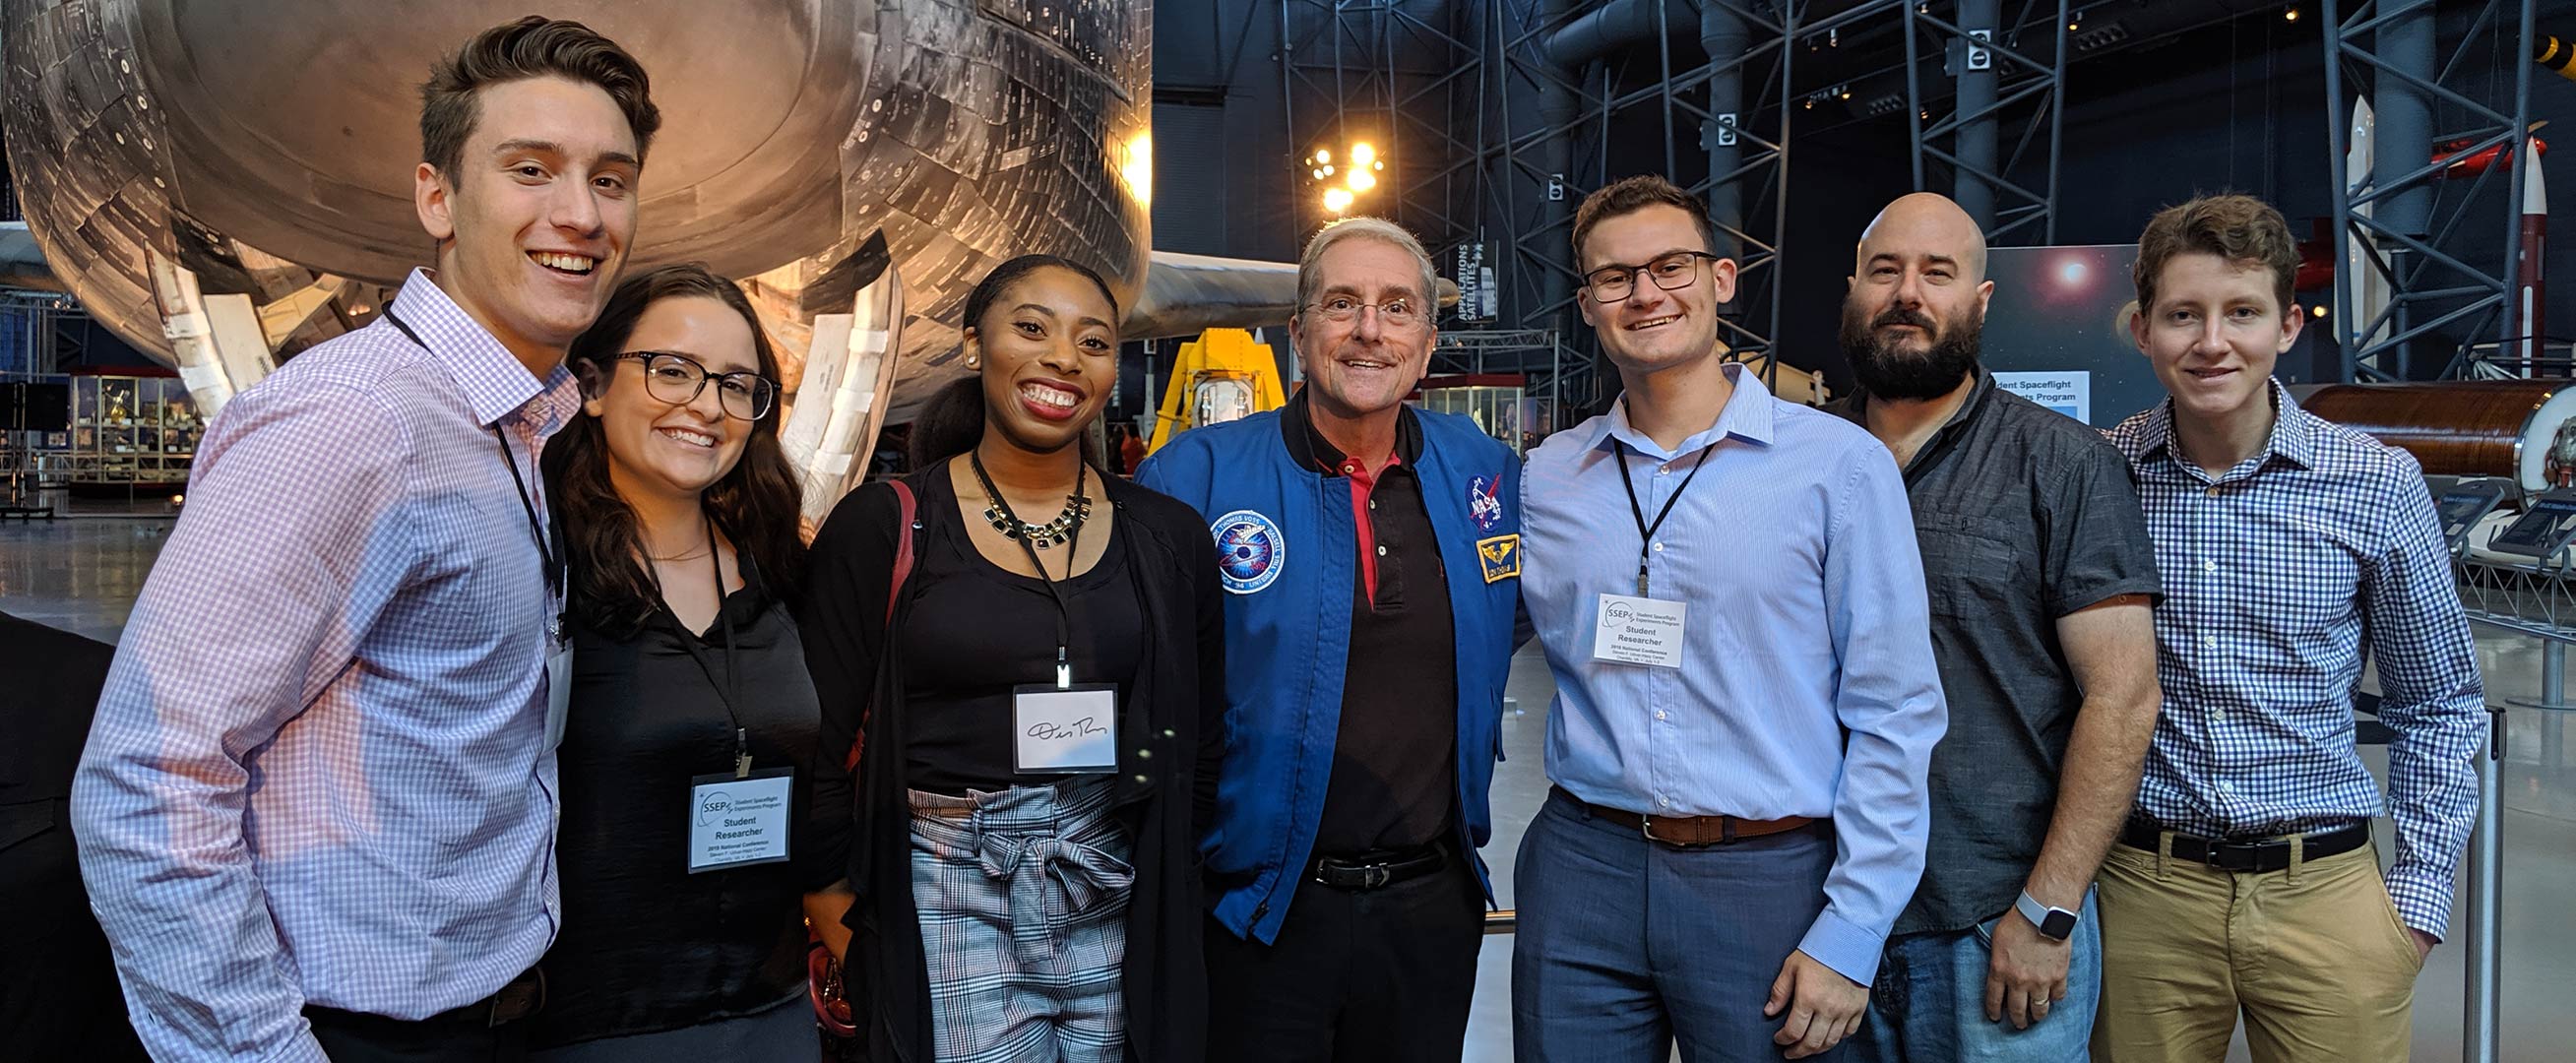 From left, Joseph Romanowski, Christina Tallone, Chioma Uka, former NASA astronaut Donald Thomas, Michael Elko, Professor Michael Law and Daniel Stoyko.